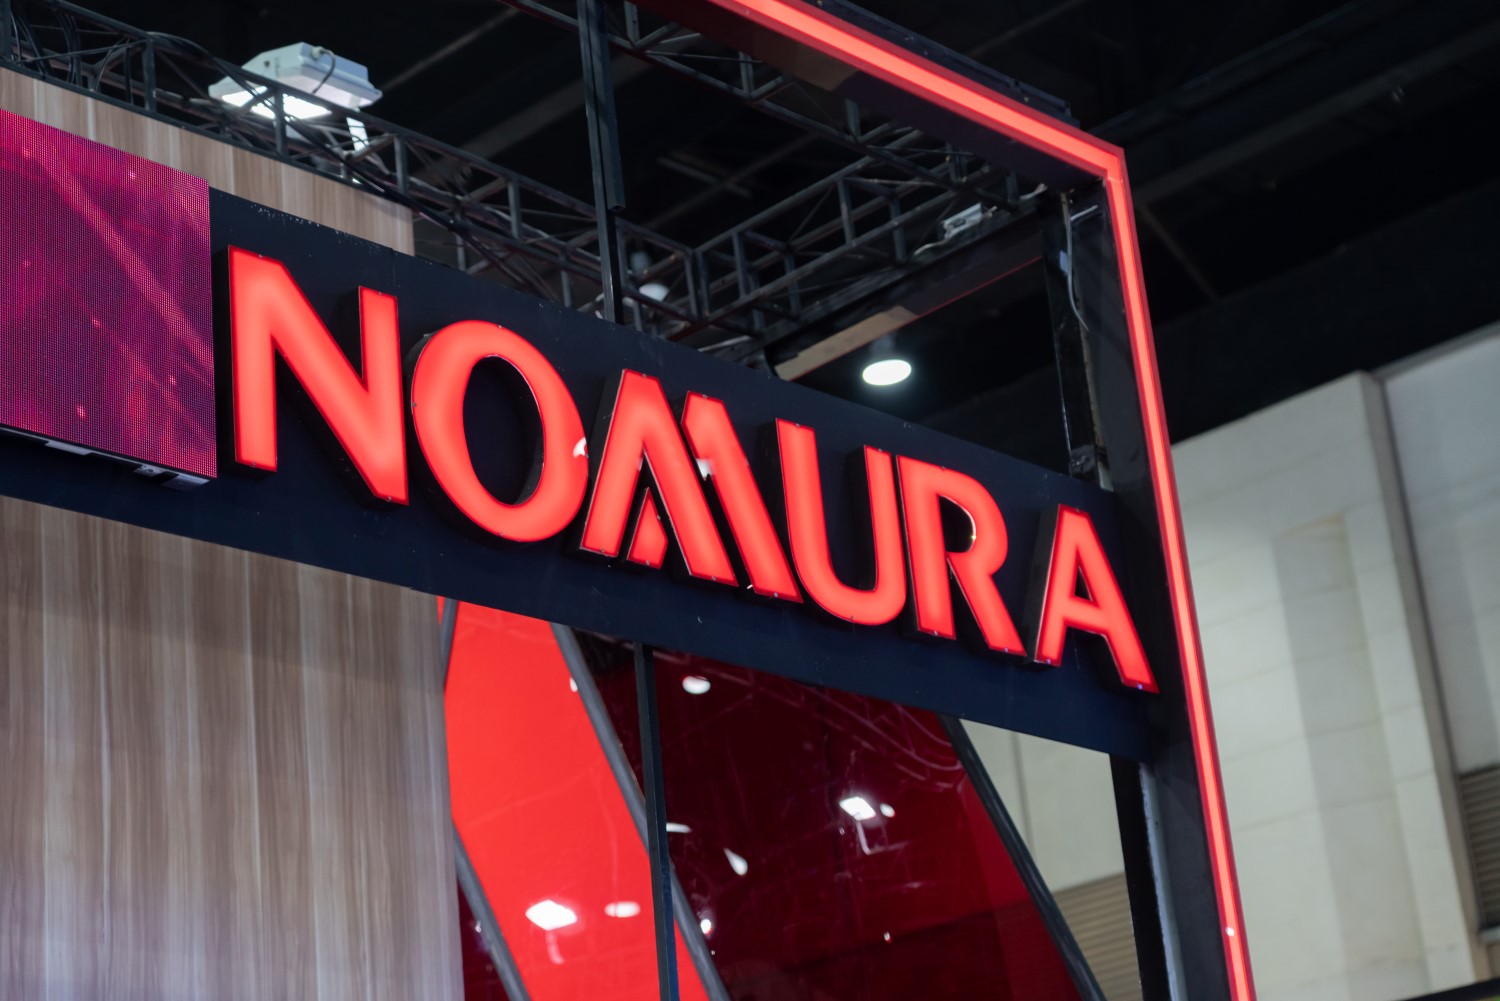 Ledger And Nomura’s Crypto Custody Launch May Be Delayed To 2020